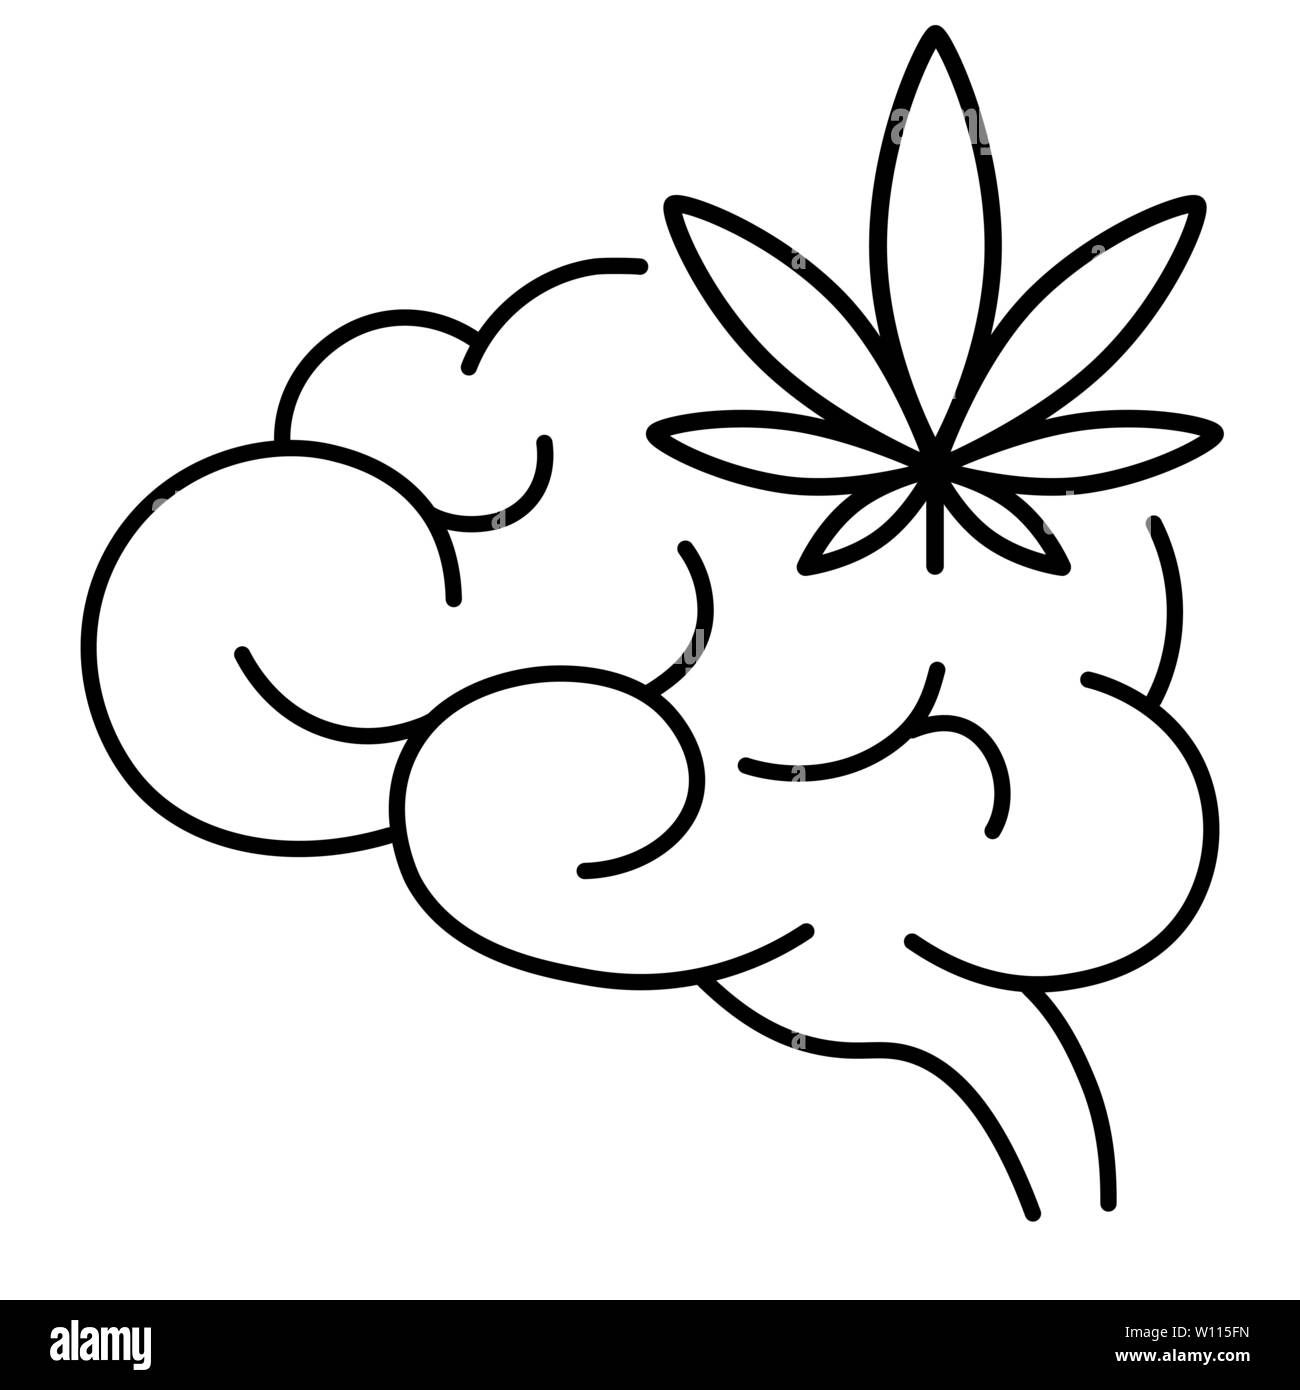 Cannabis, marijuana or weed and brain. Influence of smoking marijuana on human brain, nervous system, mental activity. Isolated vector illustration on Stock Vector